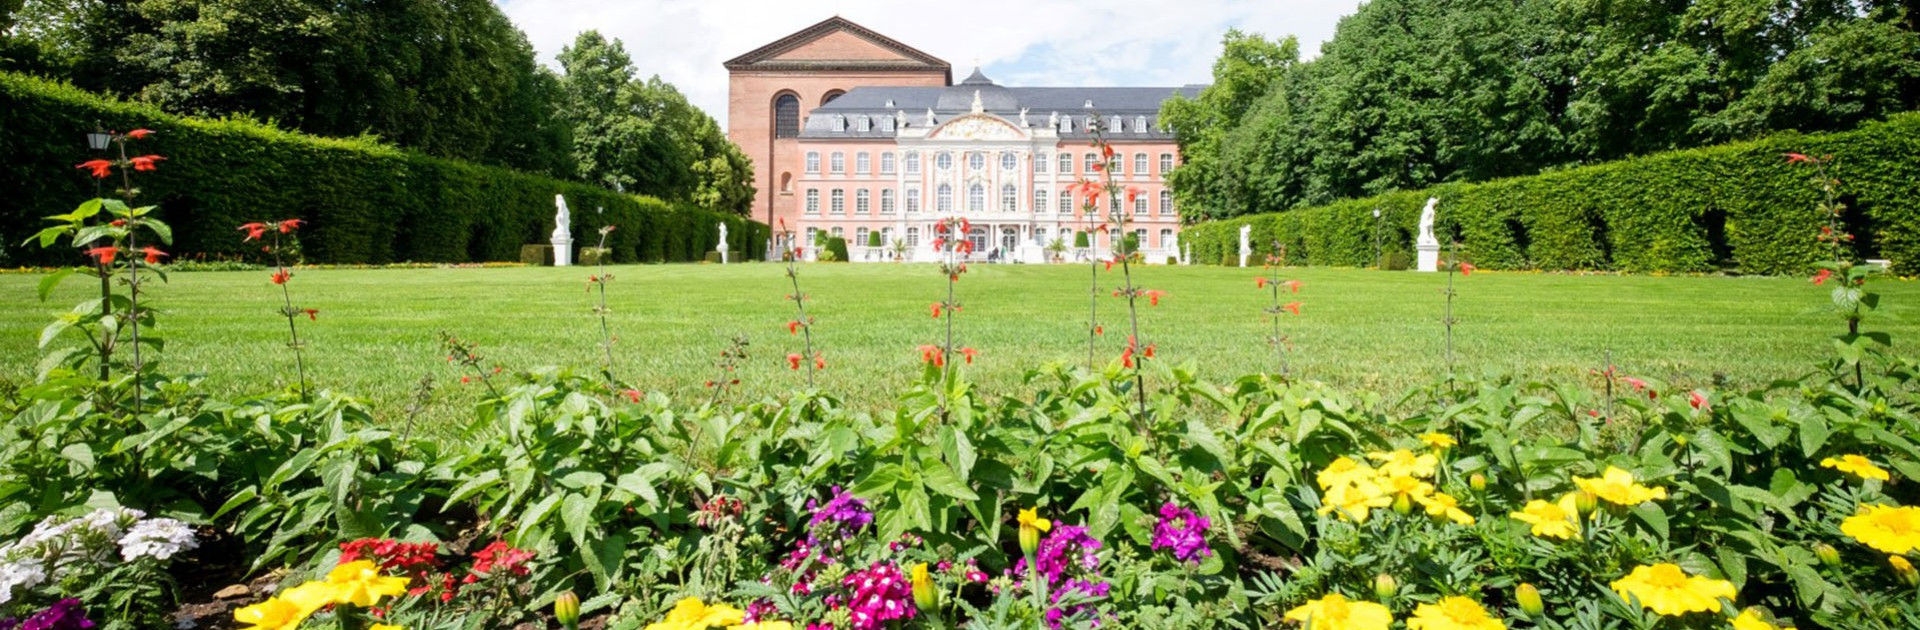 Electoral Palace - Palace Garden (Palastgarten)